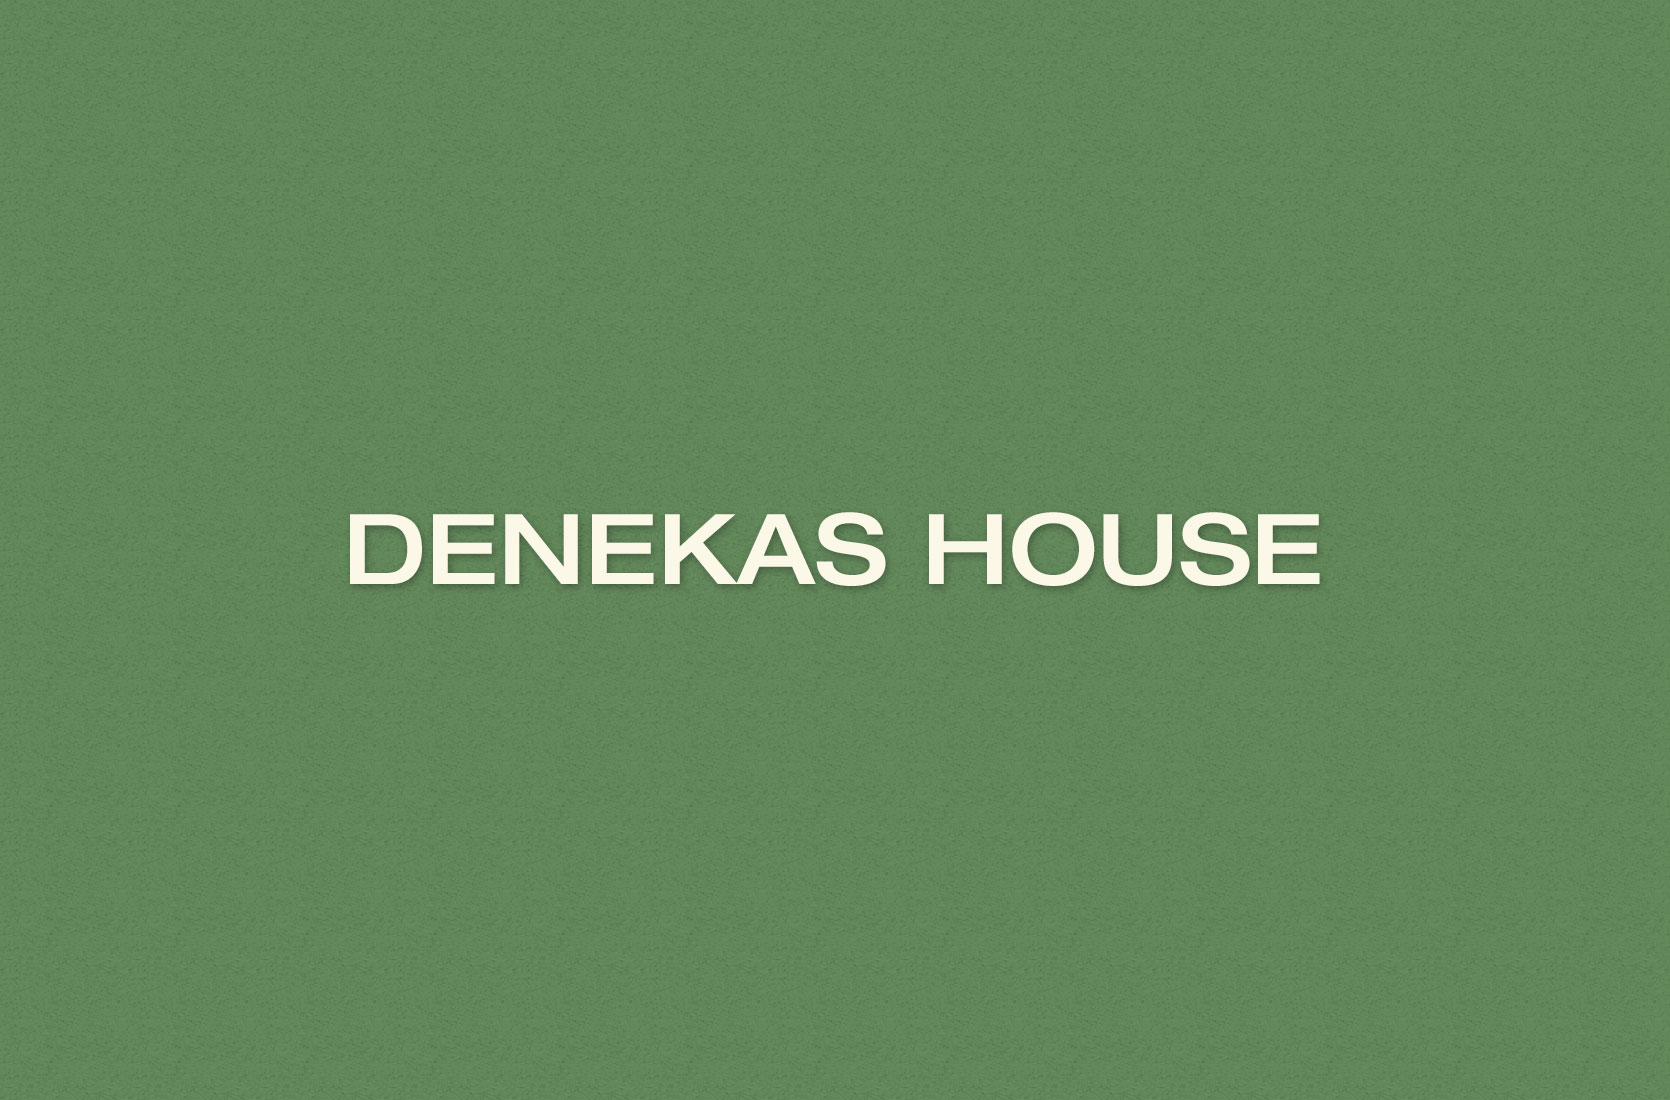 Denkas House place card